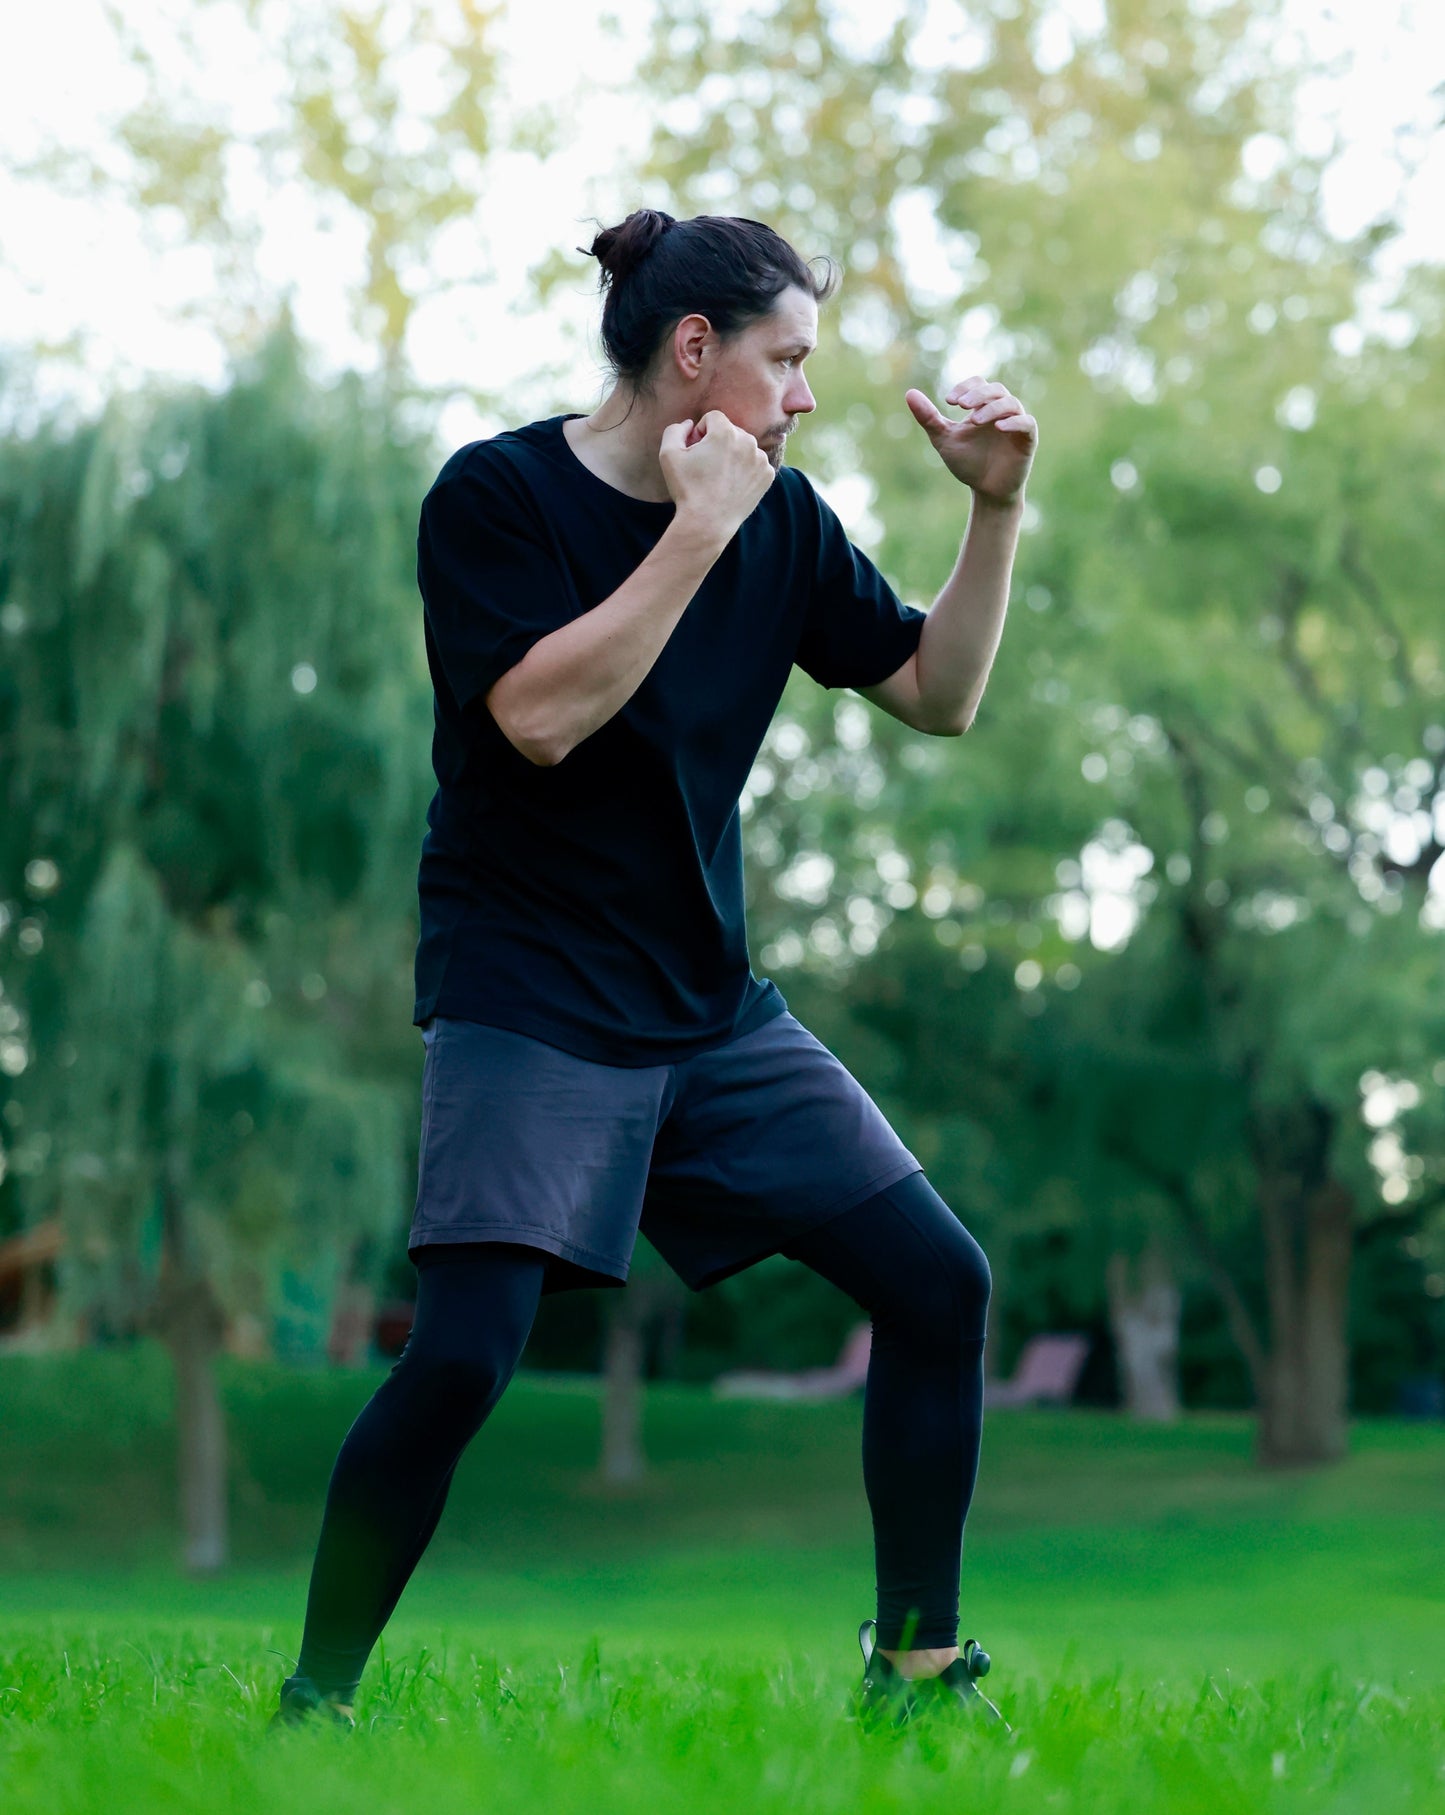 ELZI.ca Merino Black Shadow Activewear Short Sleeve Tee. Jonathan often wears merino T-shirts when he practices boxing.